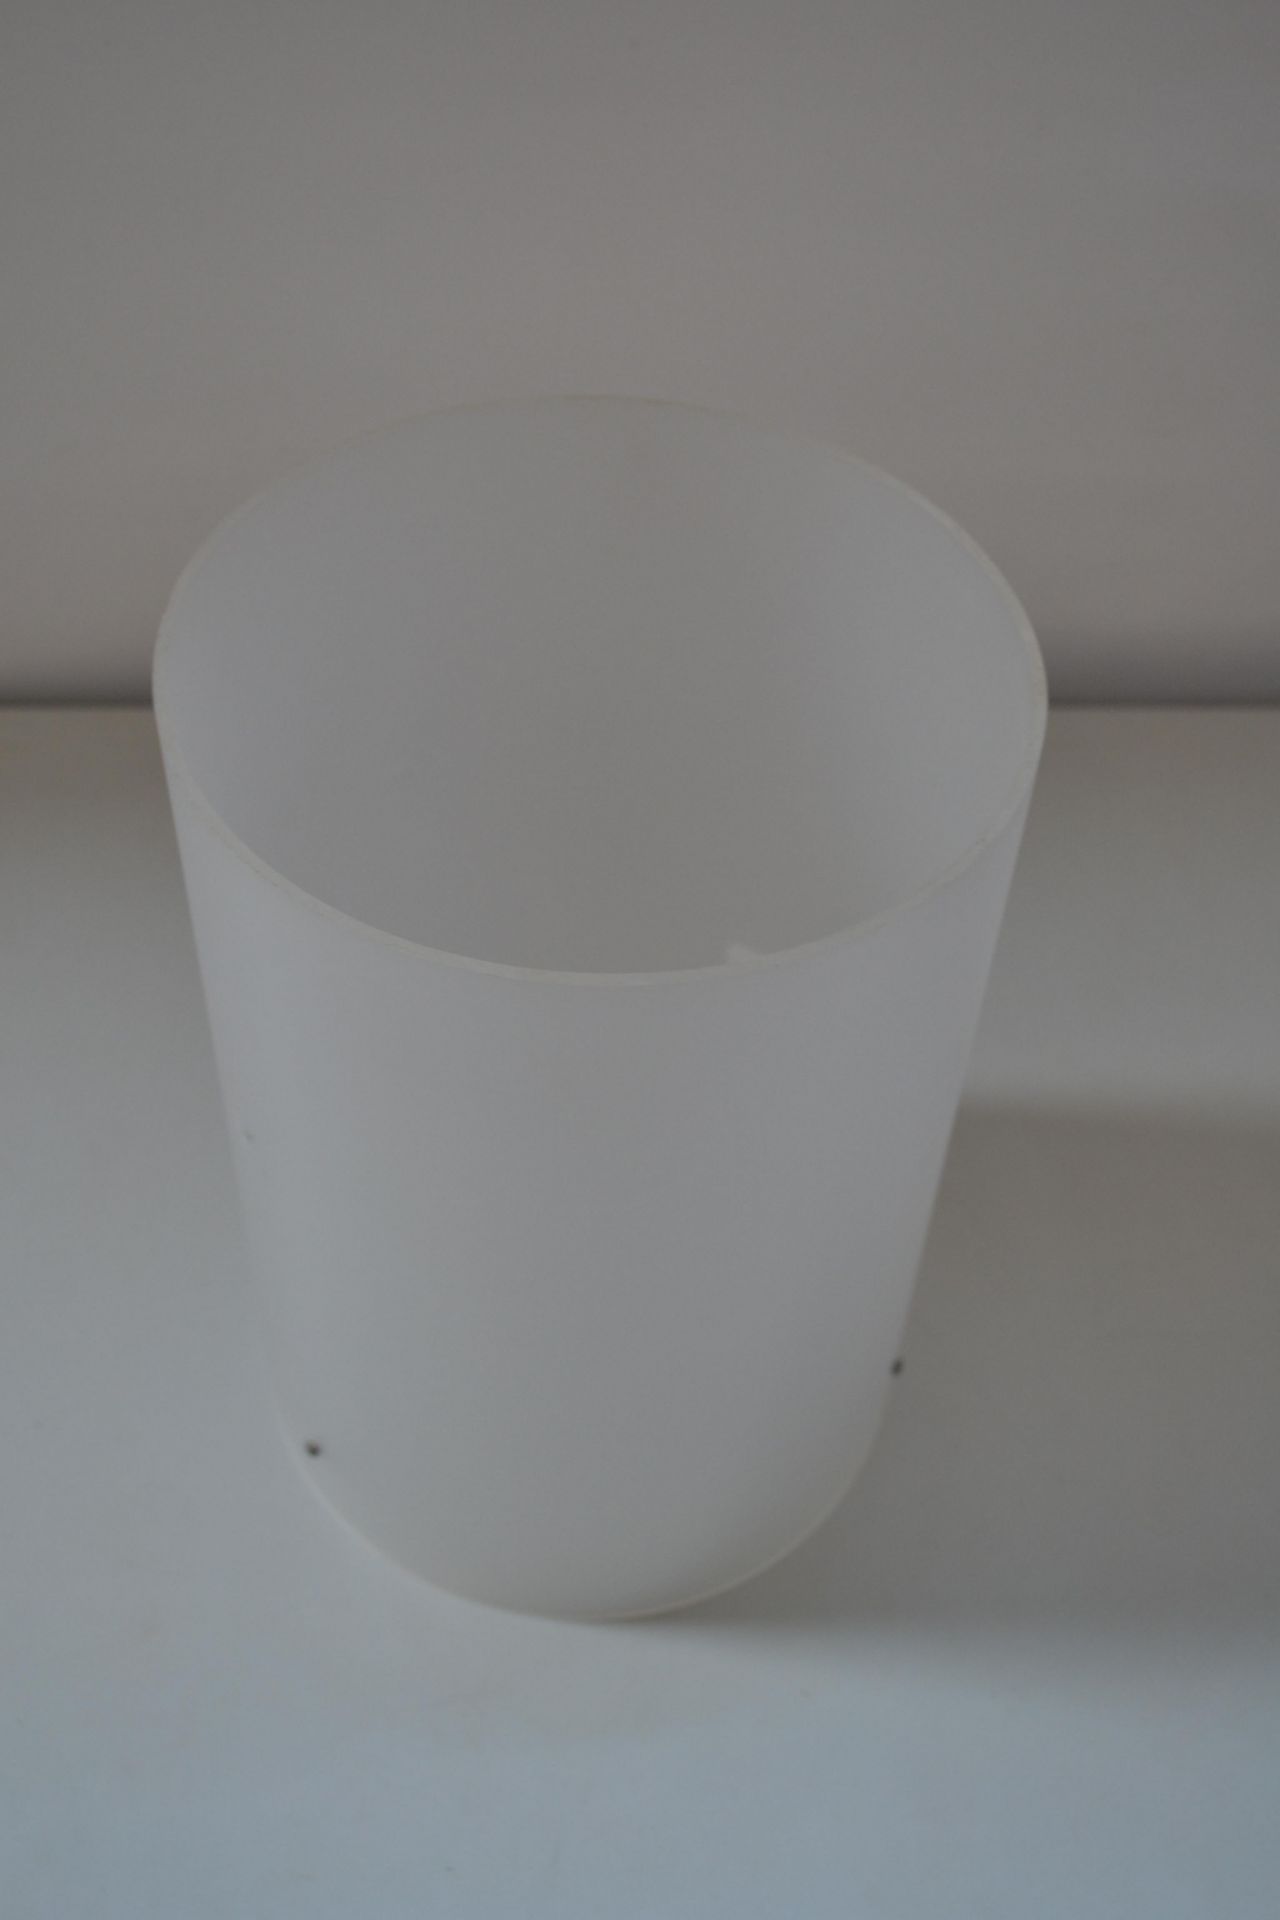 1 x Plastic Lamp Shade - Dimensions:H28/D20cm - Ref J2179 - CL314